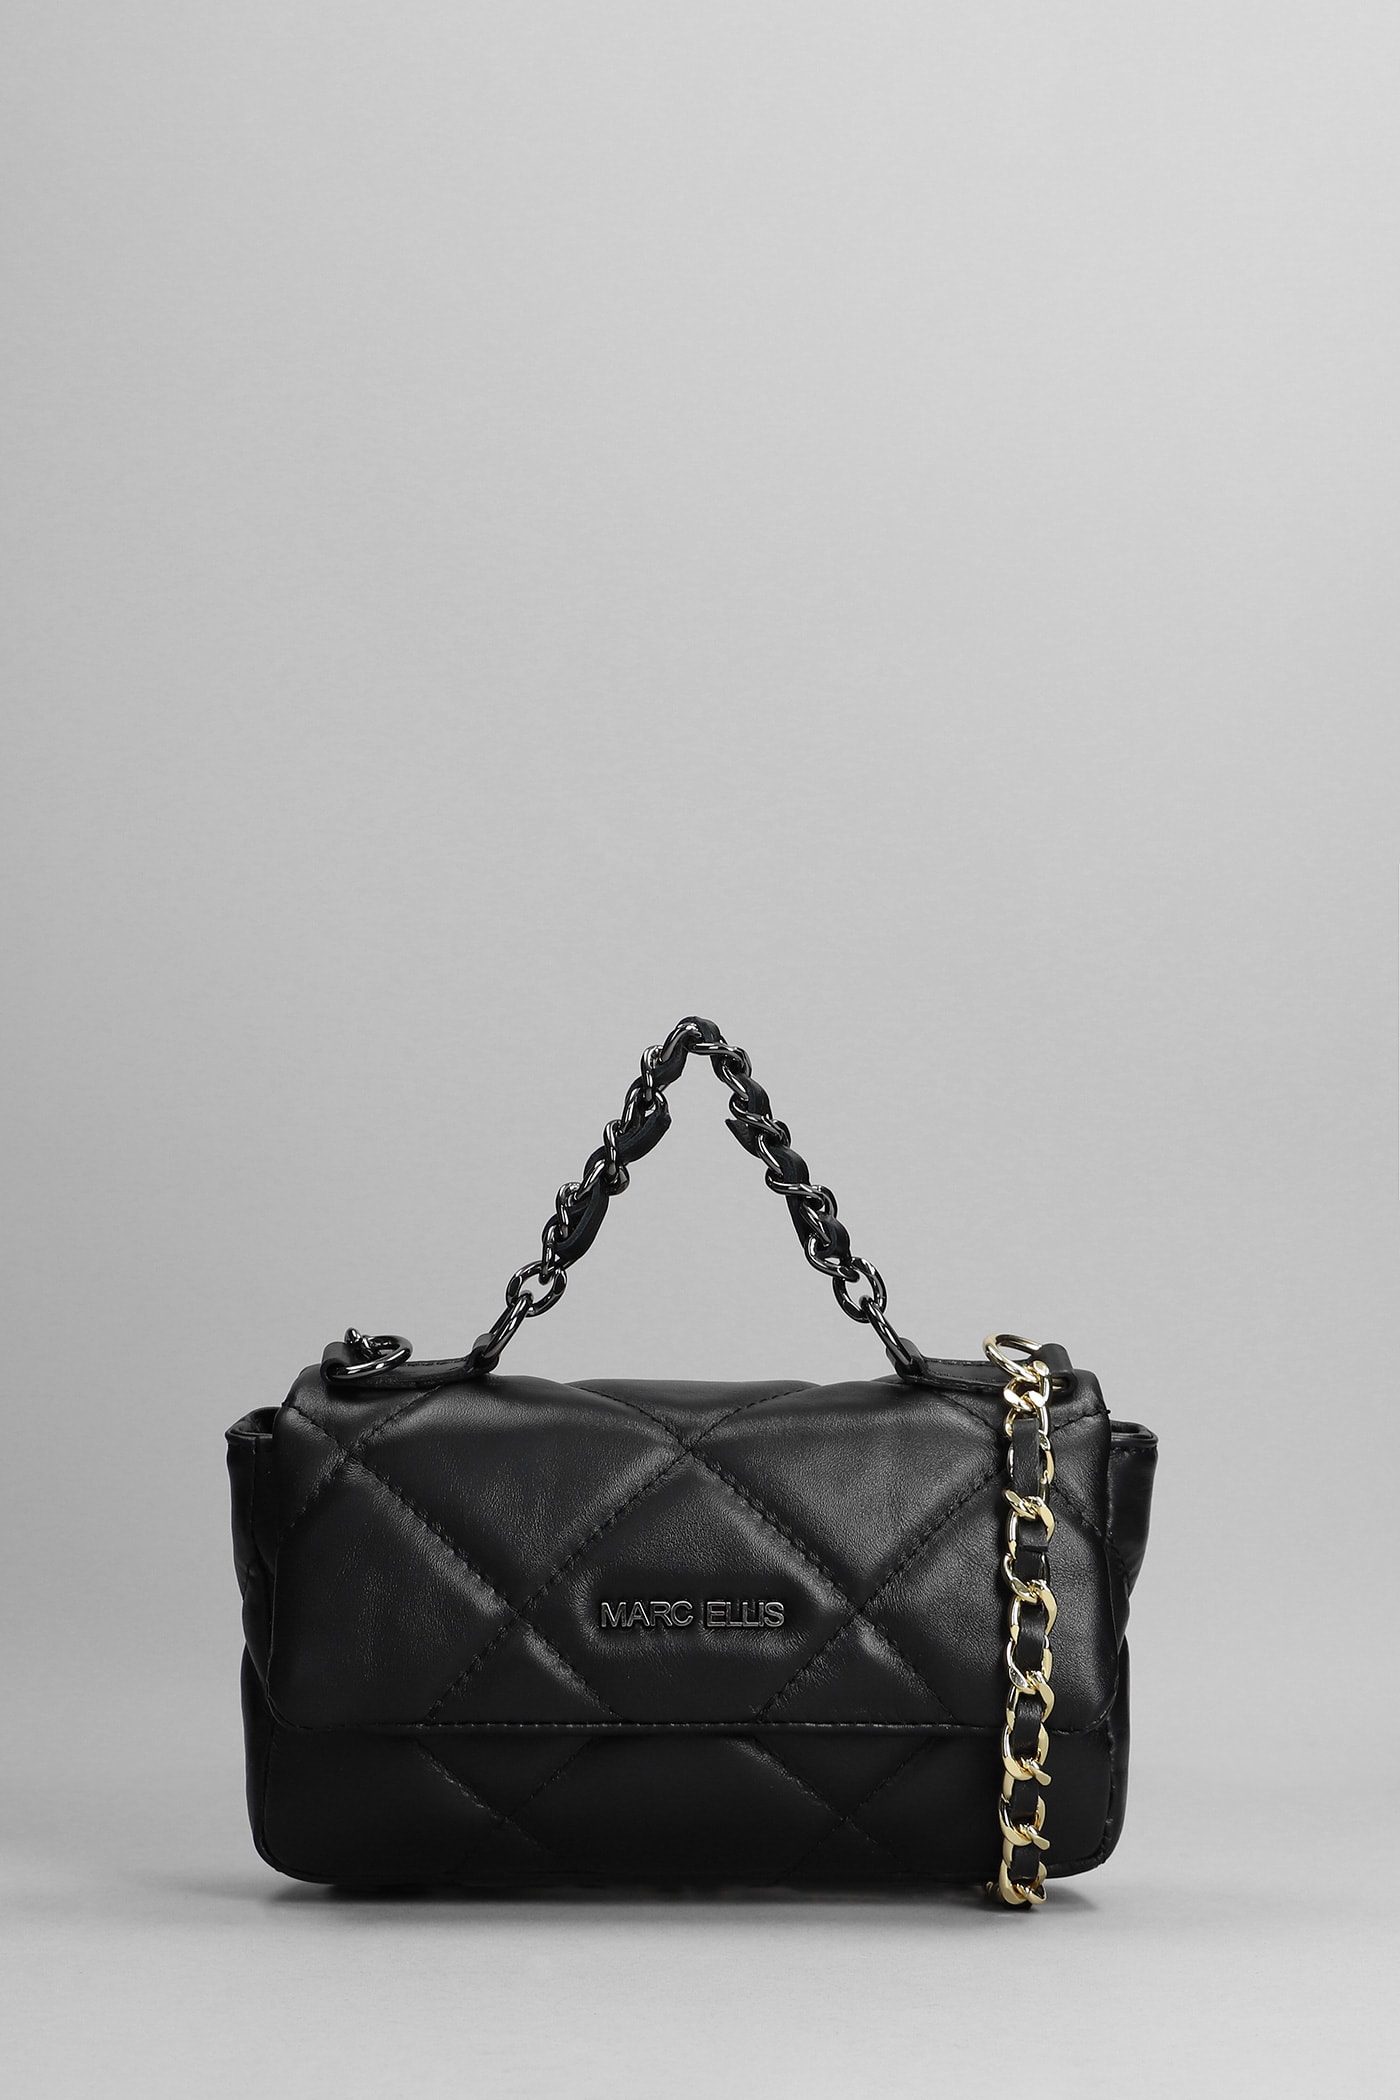 Marc Ellis Alyson S Hand Bag In Black Leather